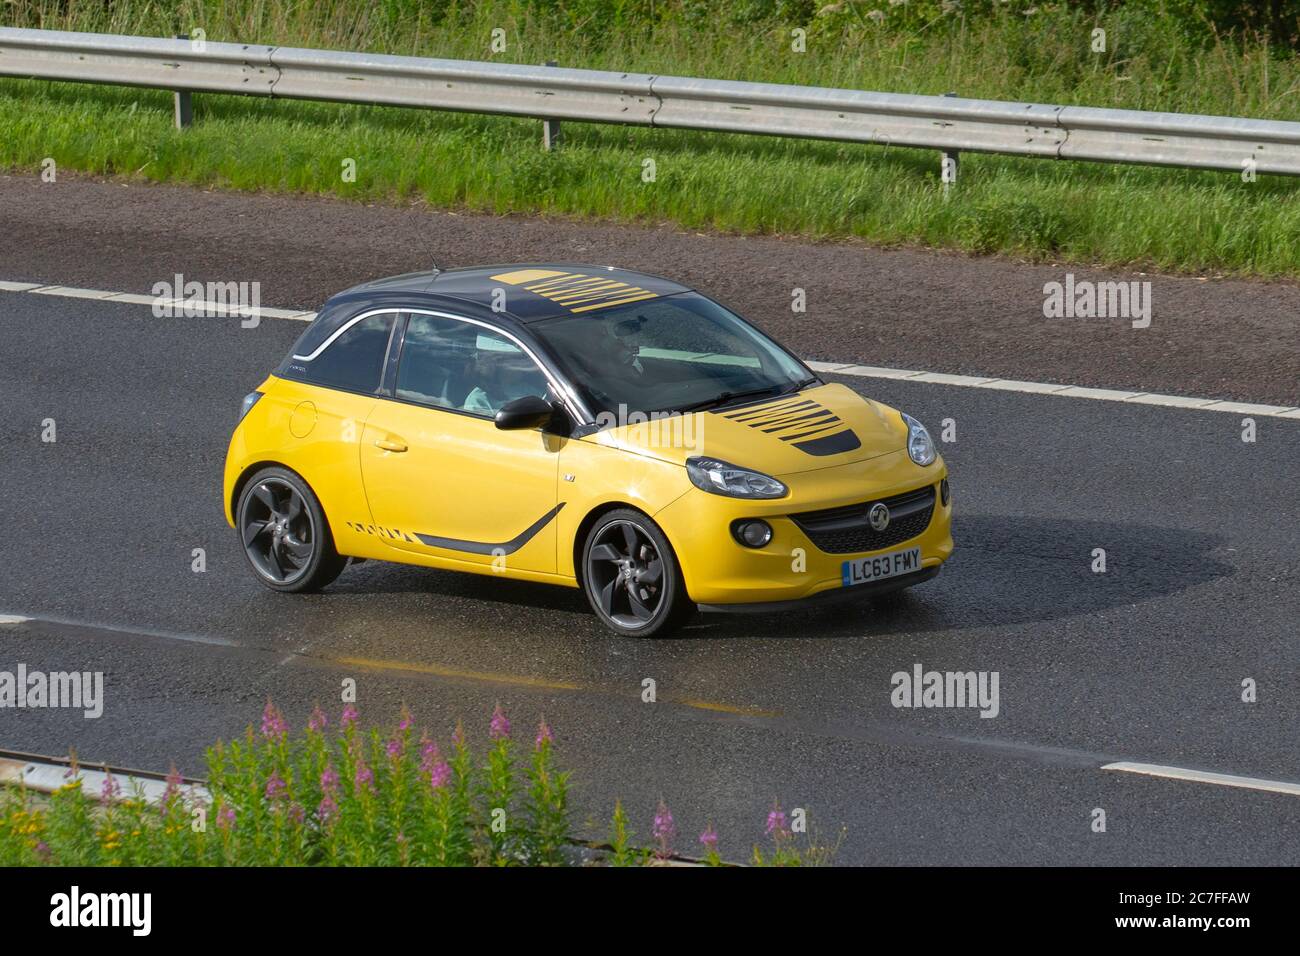 2014 yellow Vauxhall Adam Slam; Vehicular traffic moving vehicles, cars driving vehicle on UK roads, motors, motoring on the M6 motorway highway network. Stock Photo